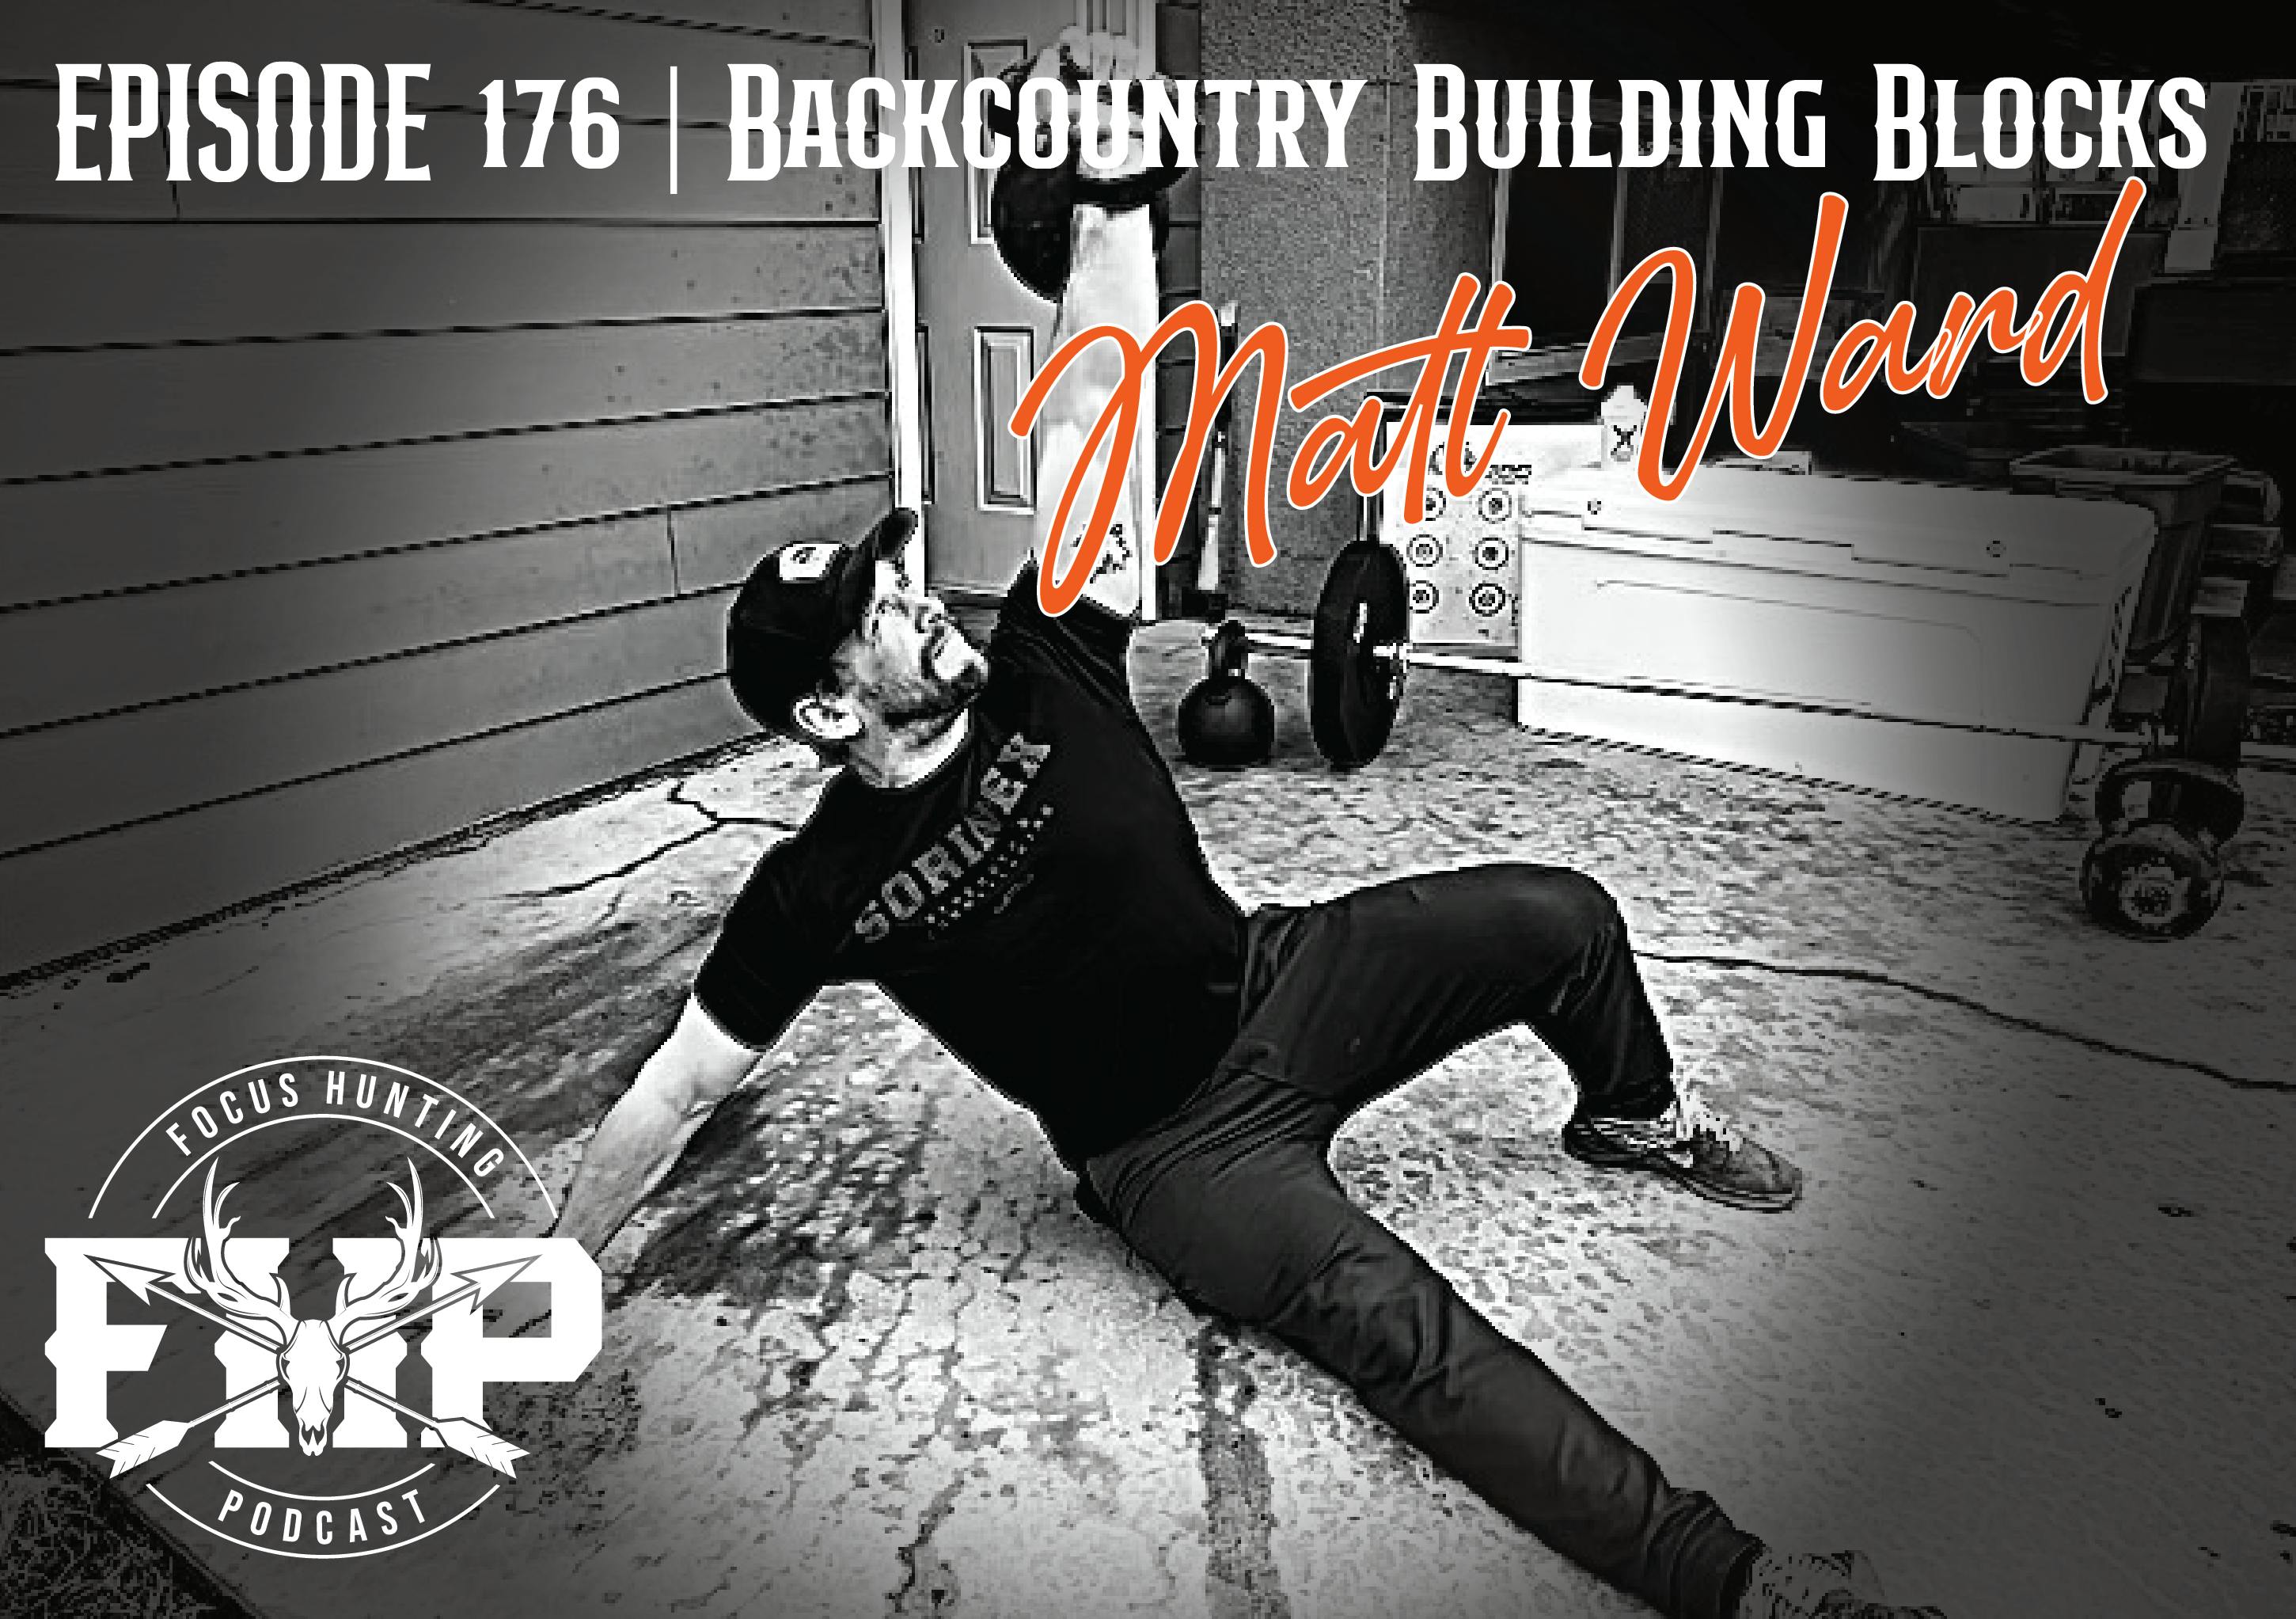 Episode #176 Backcountry Building Blocks with Matt Ward